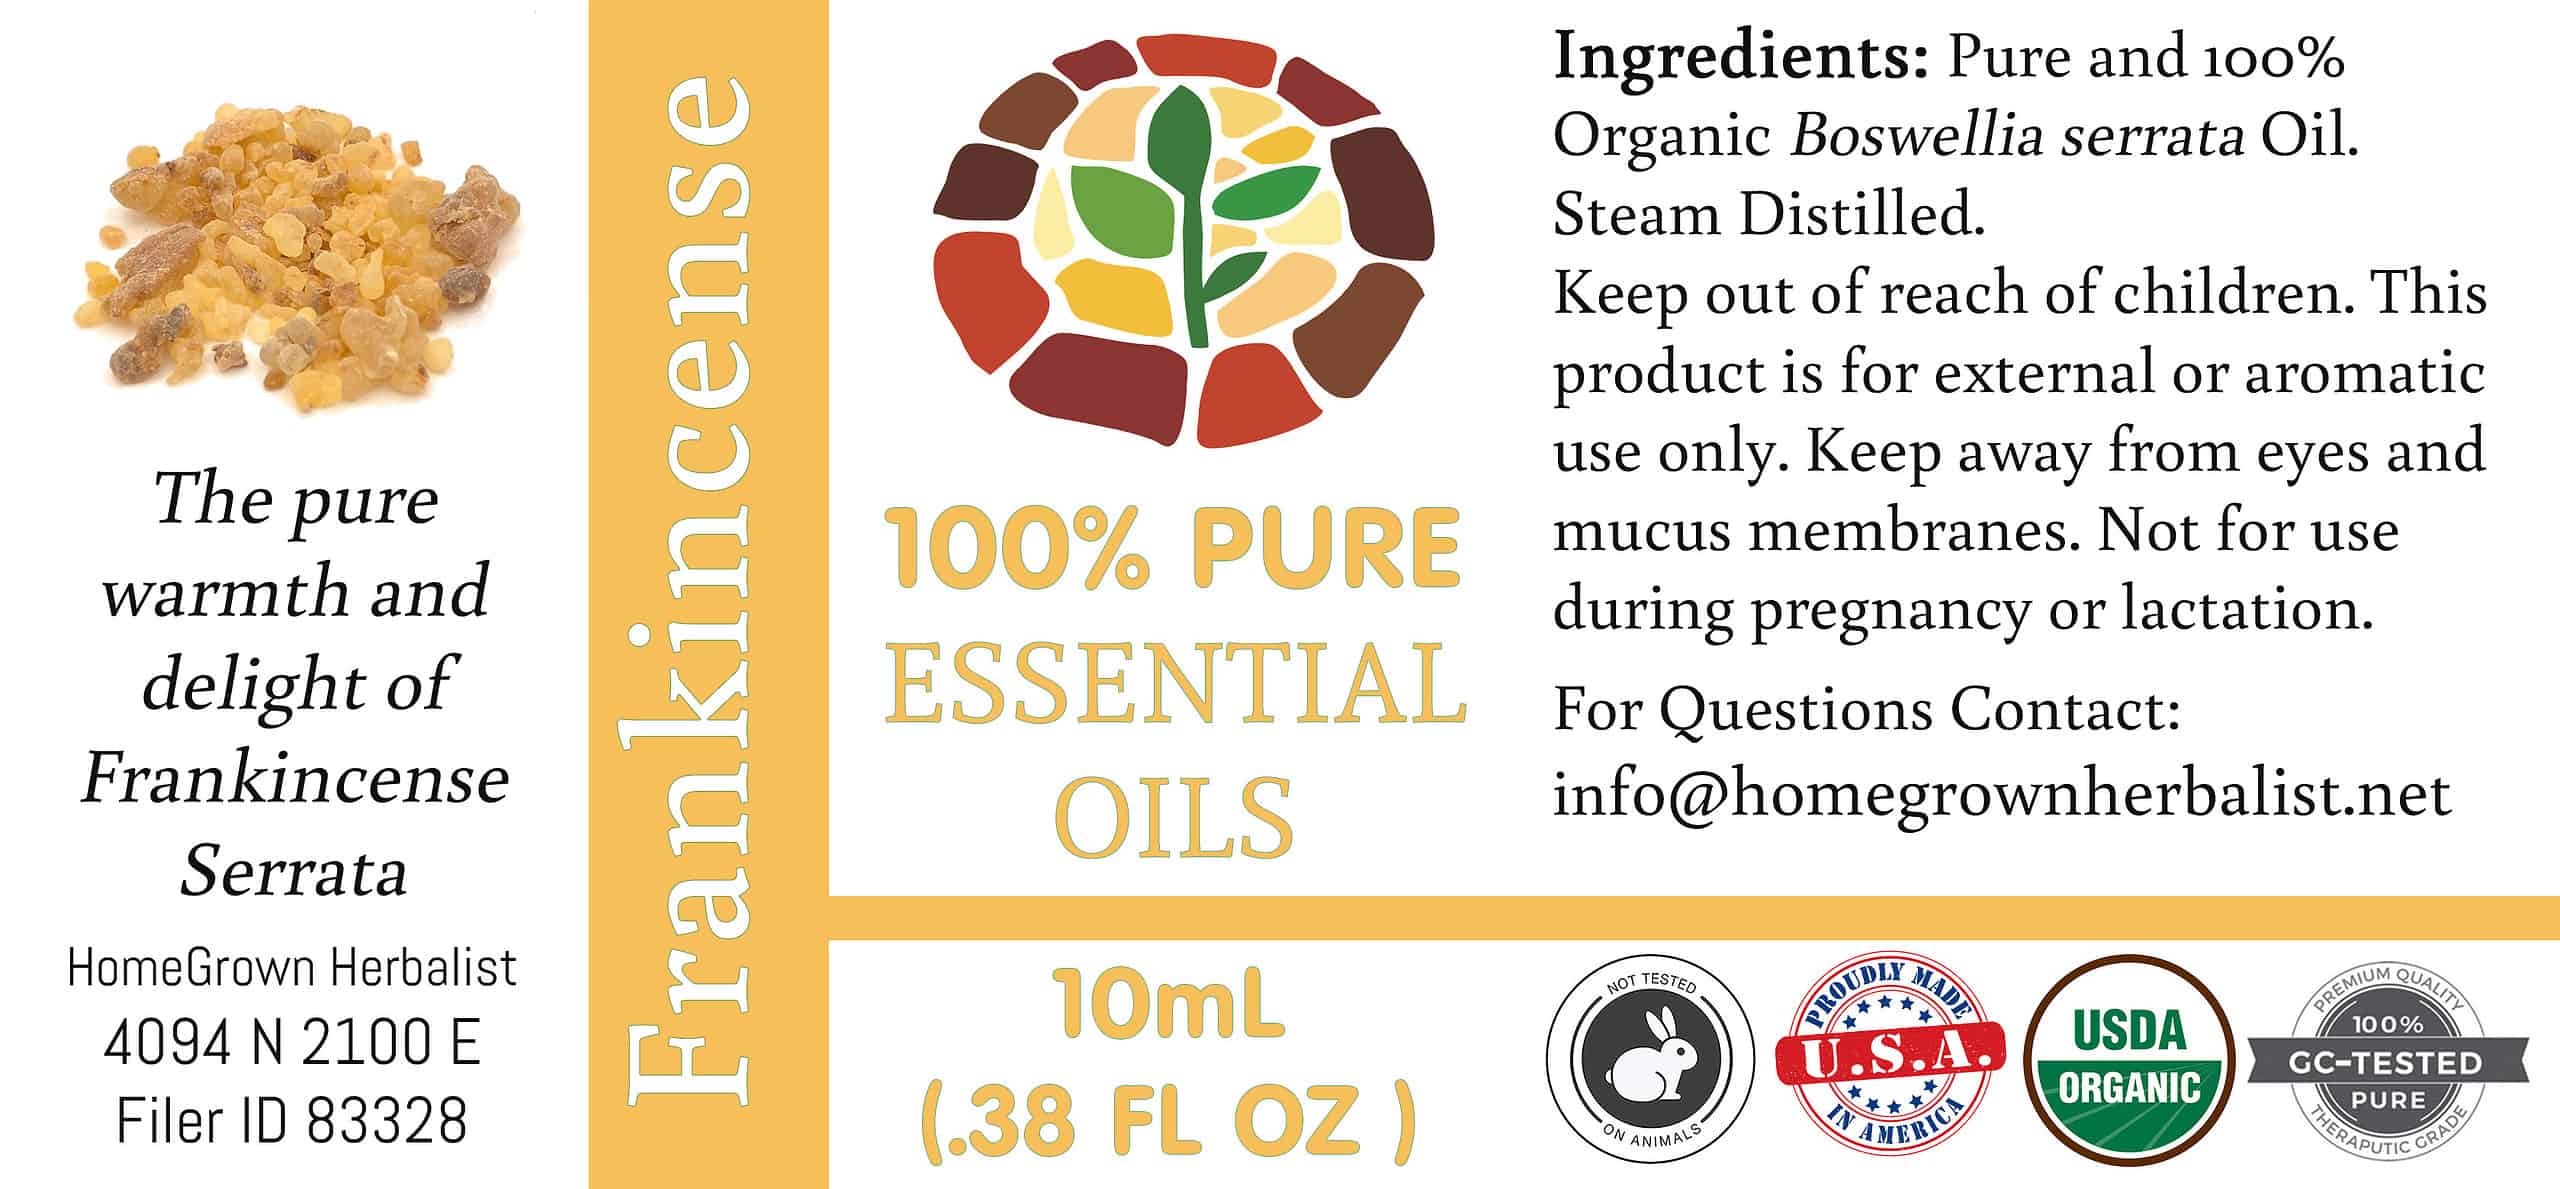 doTERRA Essential Oils USA - Historically, frankincense and myrrh